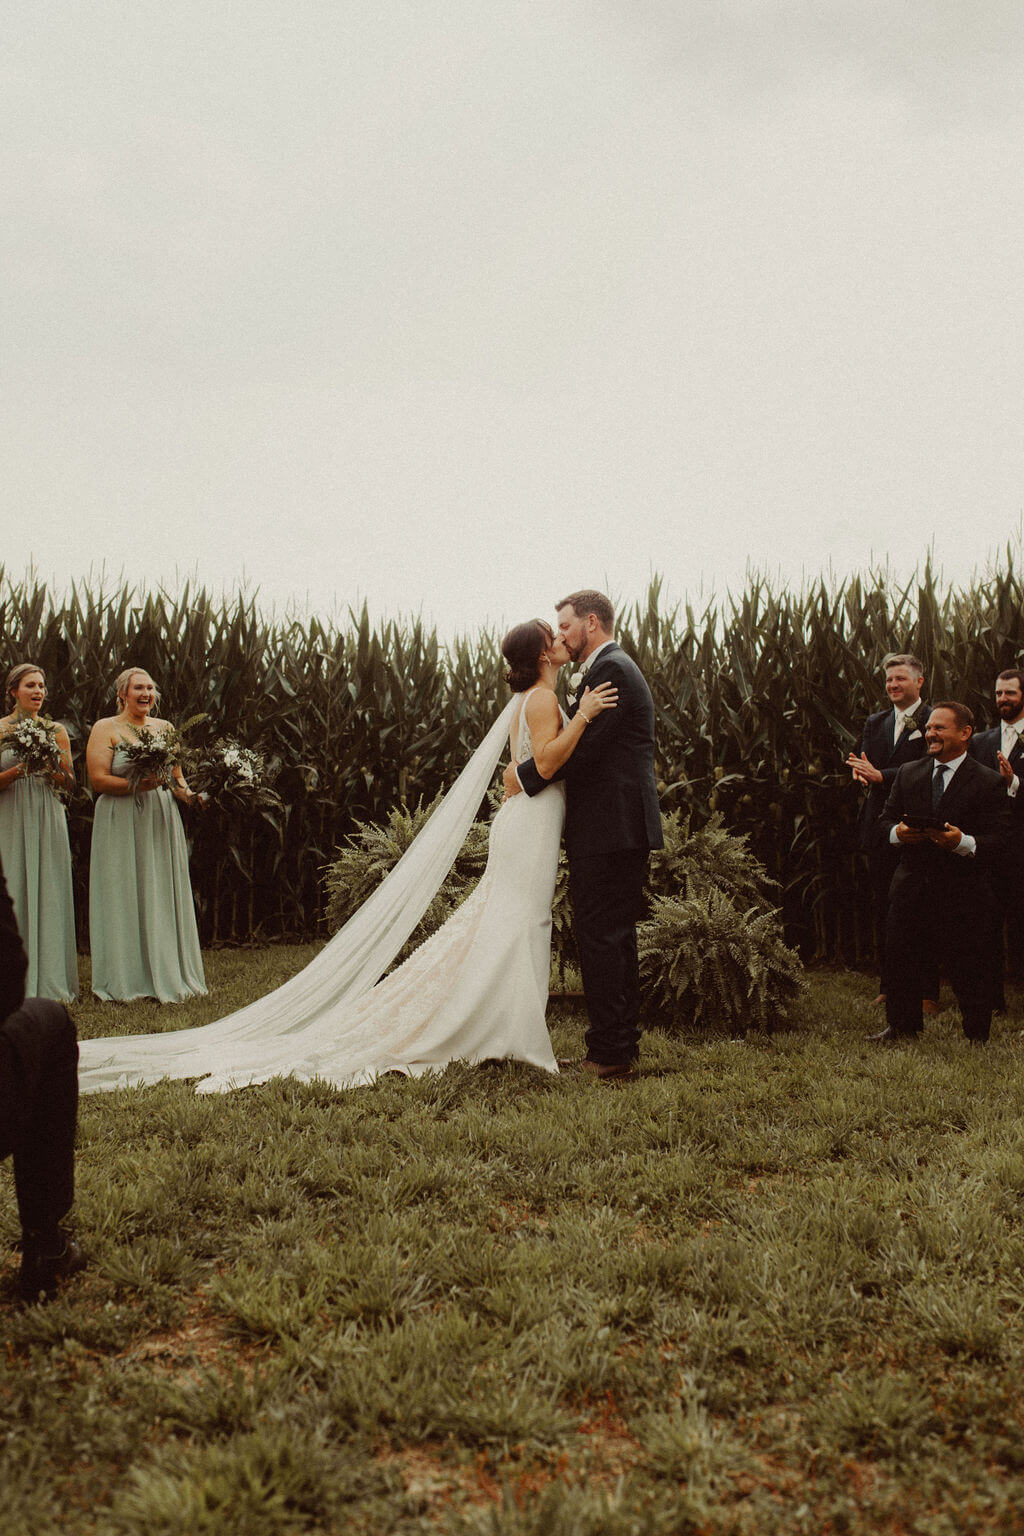 Bride and groom kiss at farm wedding ceremony